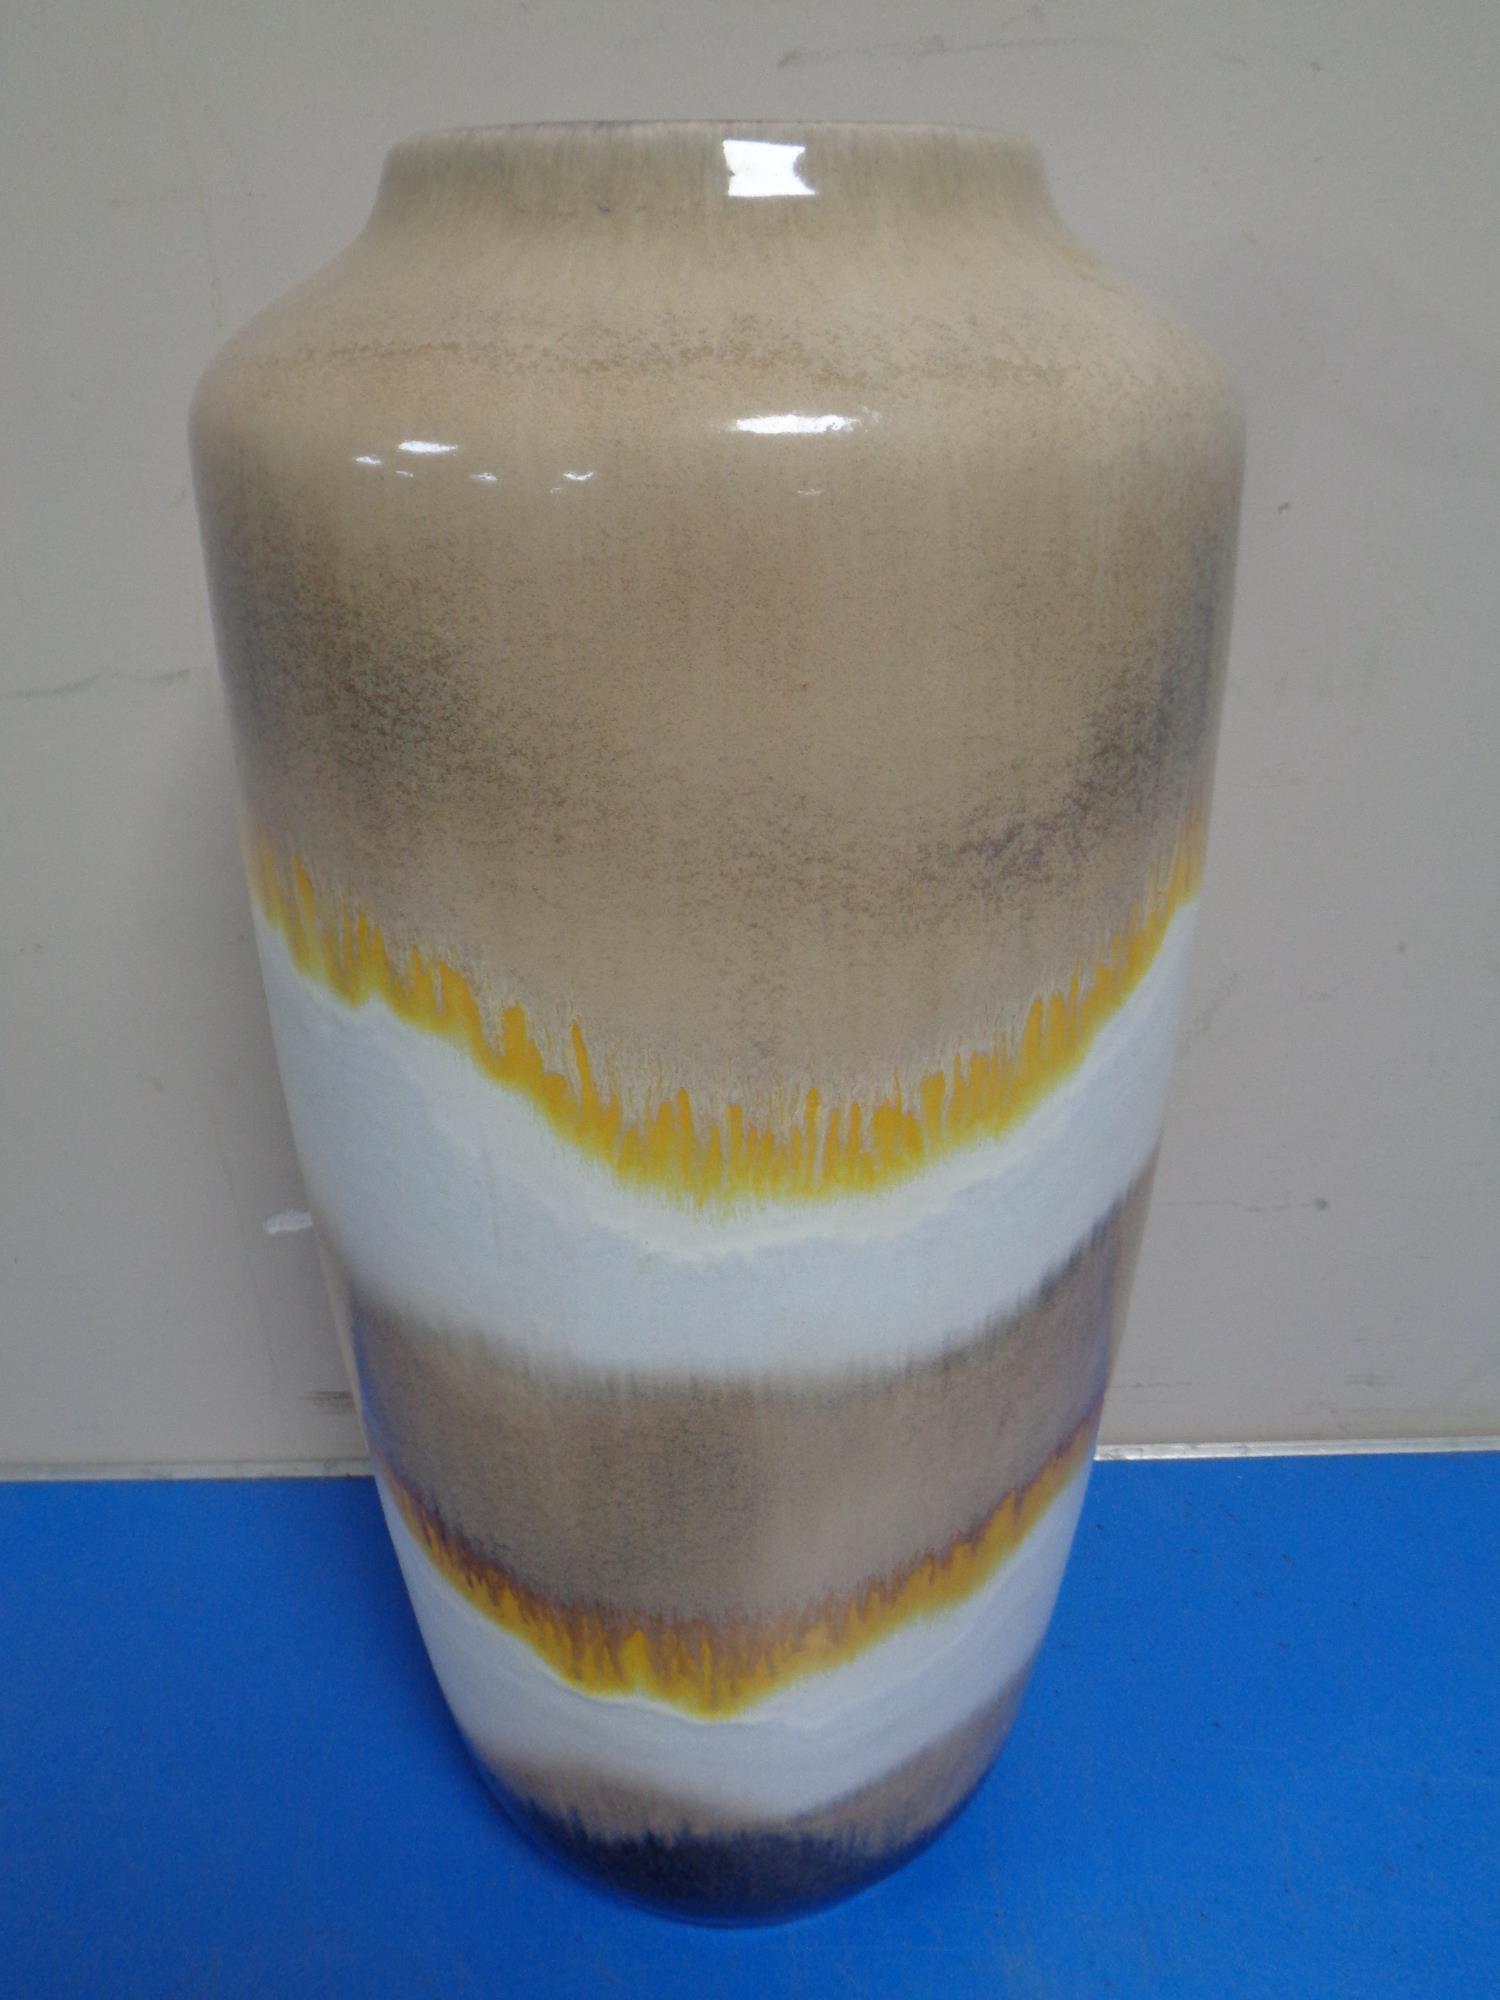 A West German pottery vase